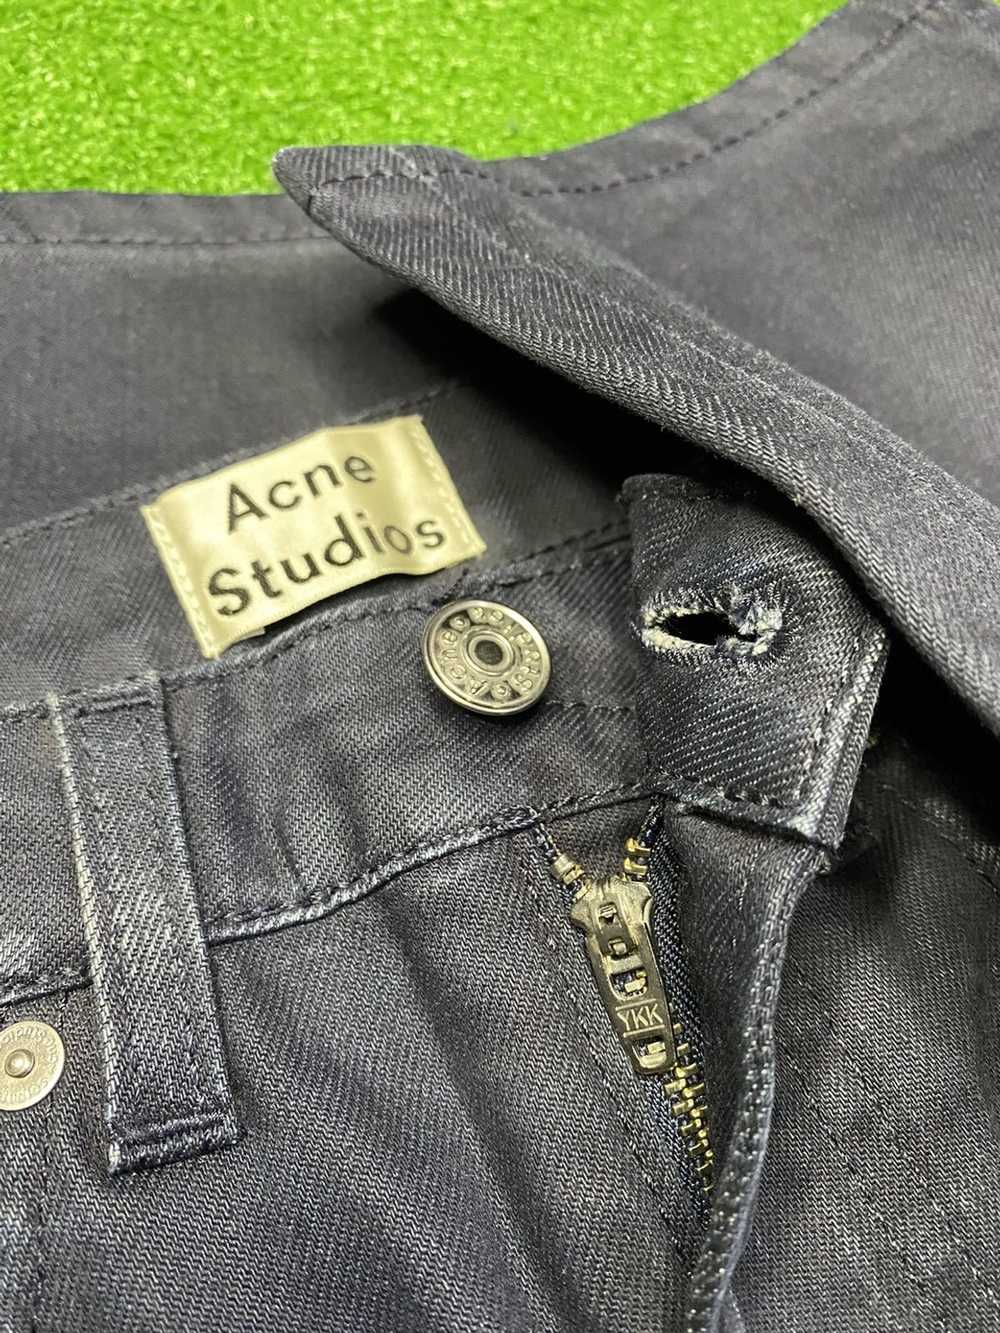 Acne Studios Acne Studios Twilight Patti Jeans - image 8